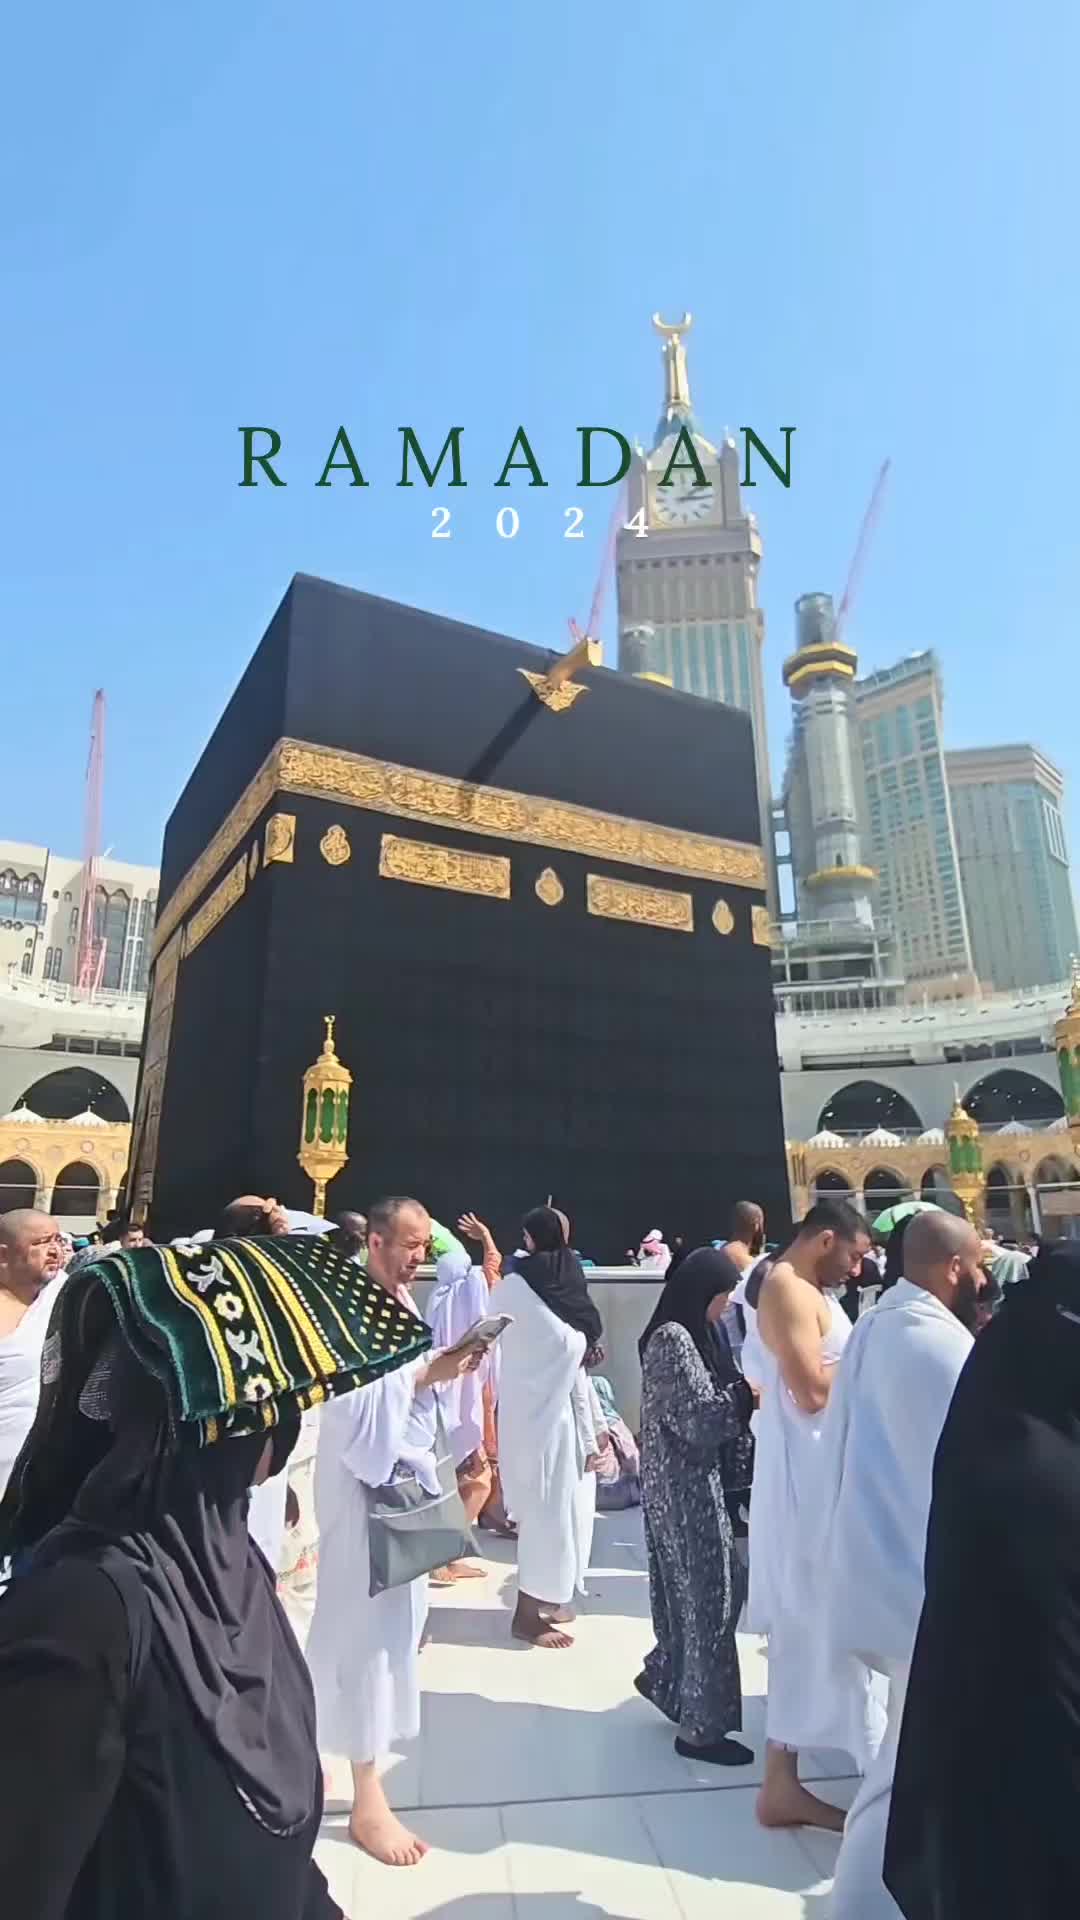 📍Ramadan Mubarak to you and your loved ones. May the celebrations of this fasting month spread happiness and joys in your life!
.
.
📍Makka and Medina, Saudi Arabia
.
.
.
#ramadan2024 #ramadanmubarak🌙 #ramadanvibes #happyramadan #ramadancollection #makkah_al_mukaaramah #ramadankarim #ramadanmubarak #ramadan_kareem #ramadan_mubarak